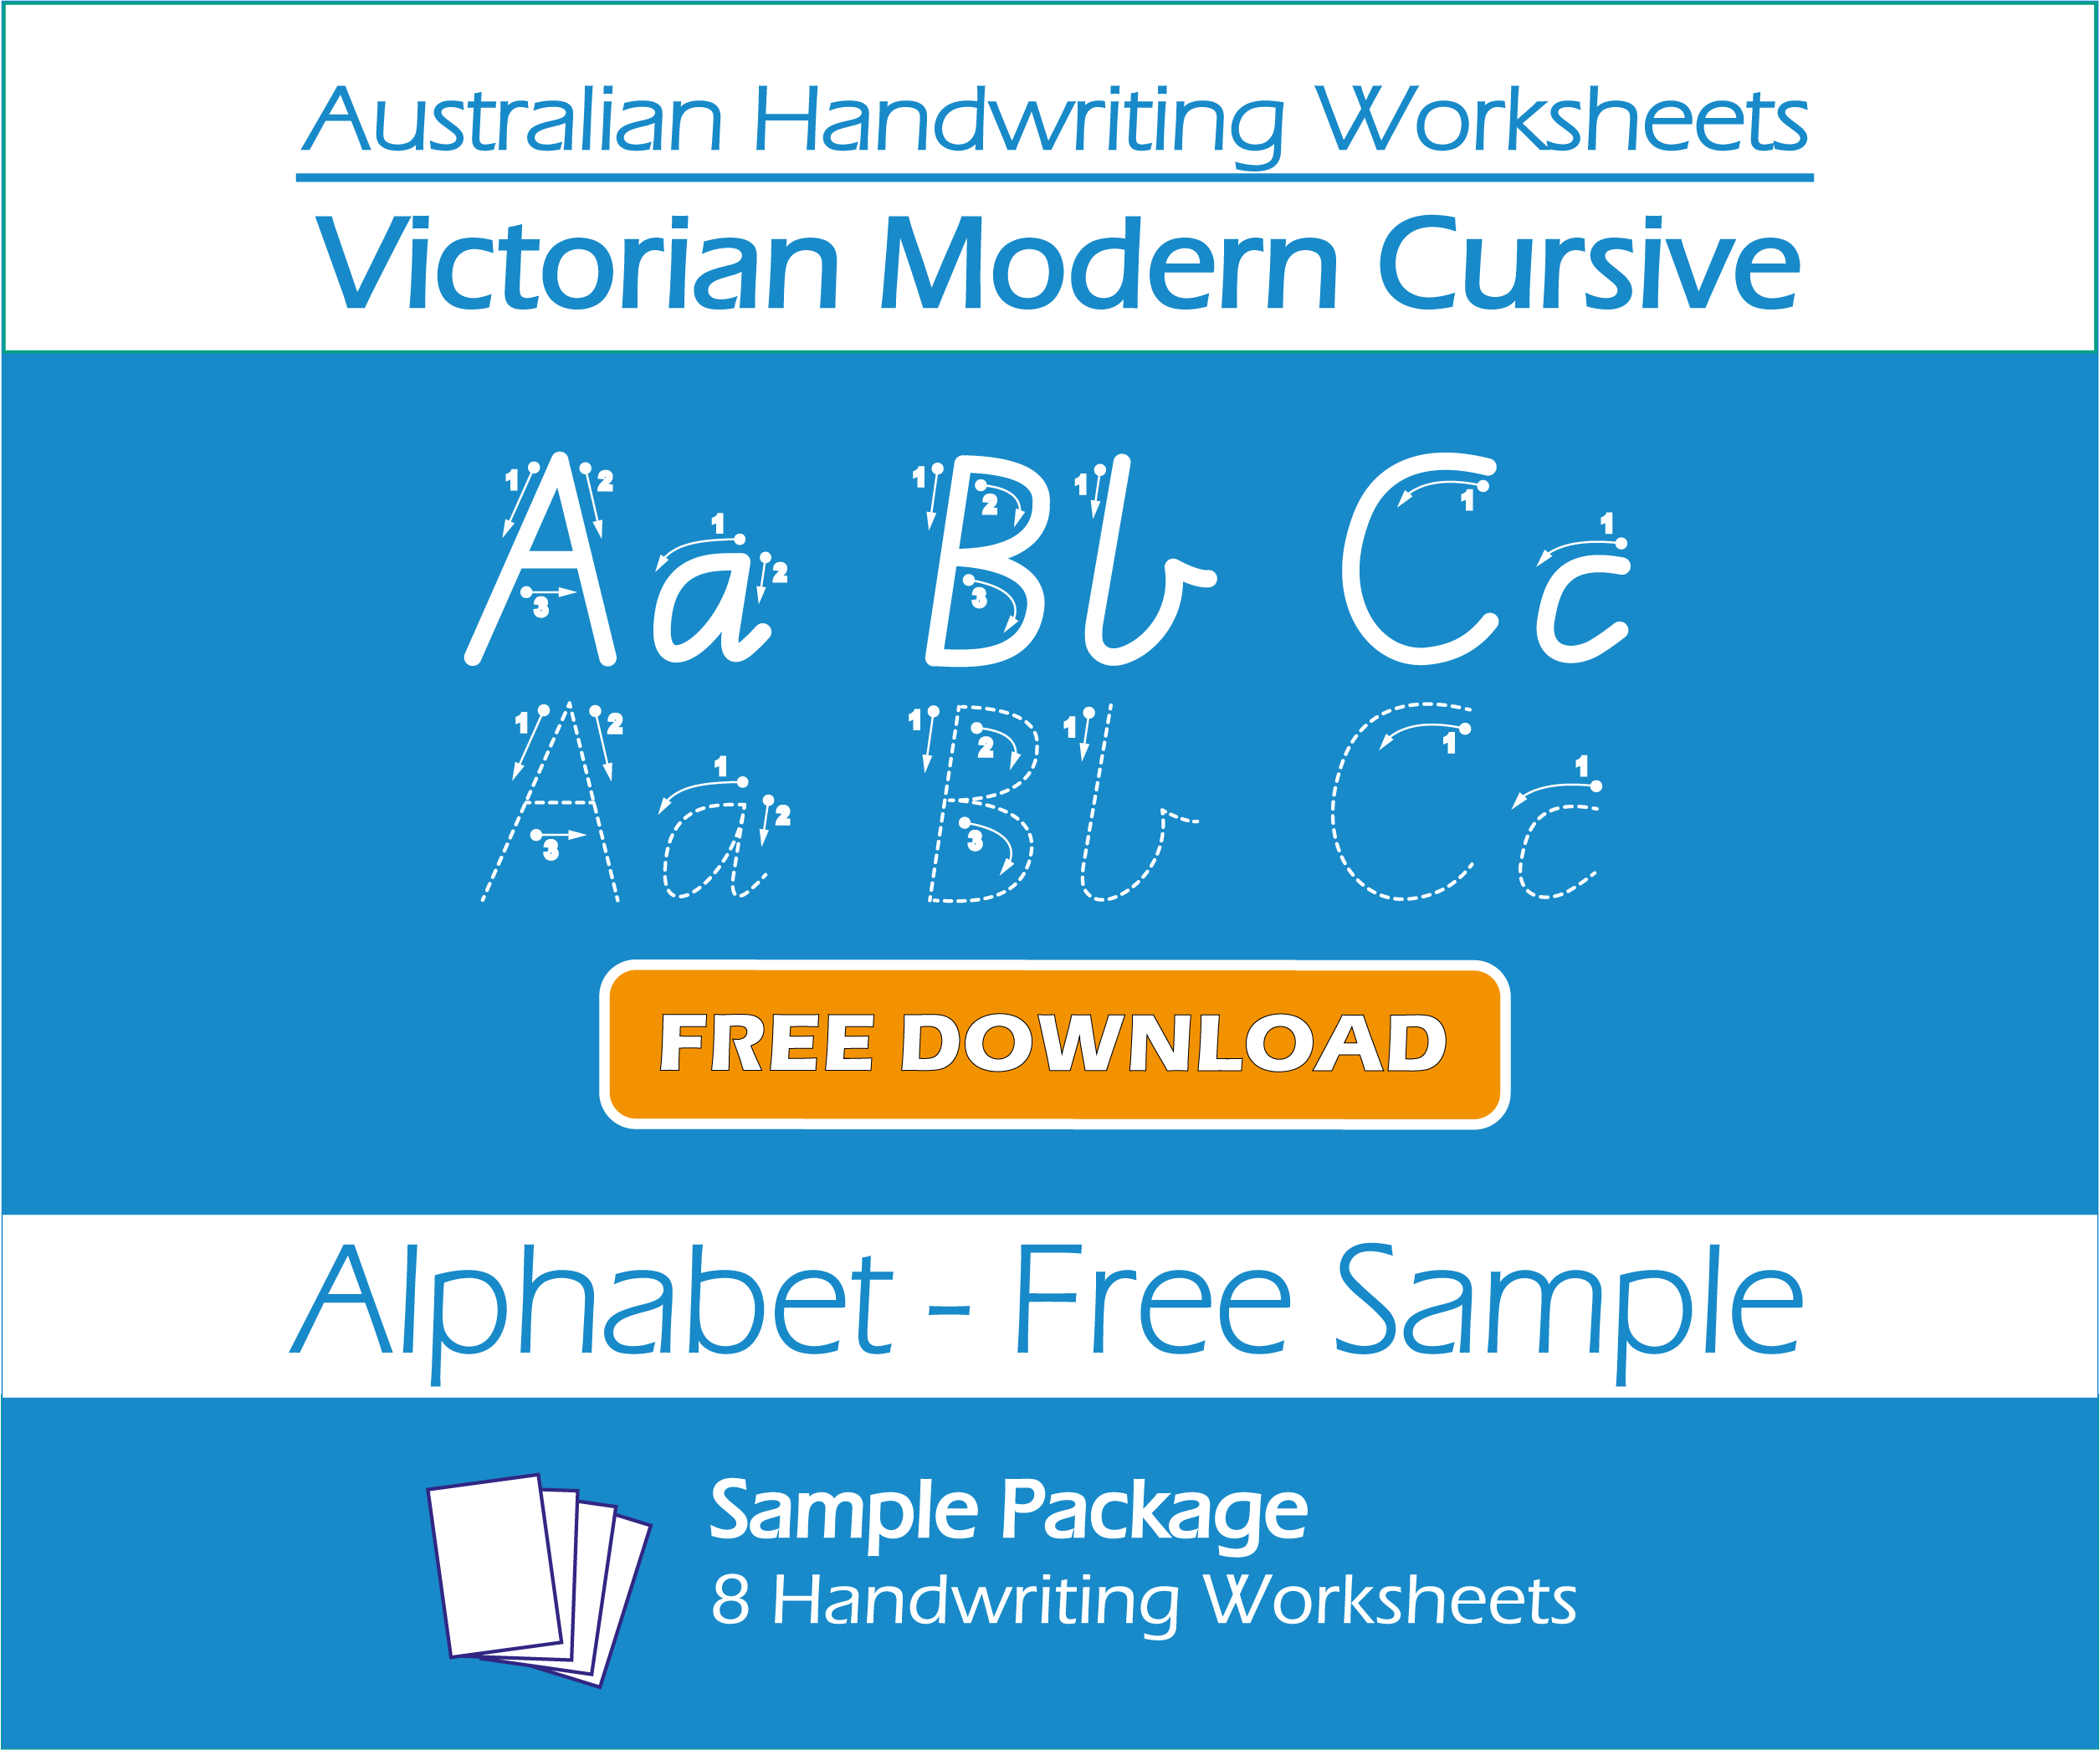 Australian Handwriting Worksheets – Victorian Modern Cursive